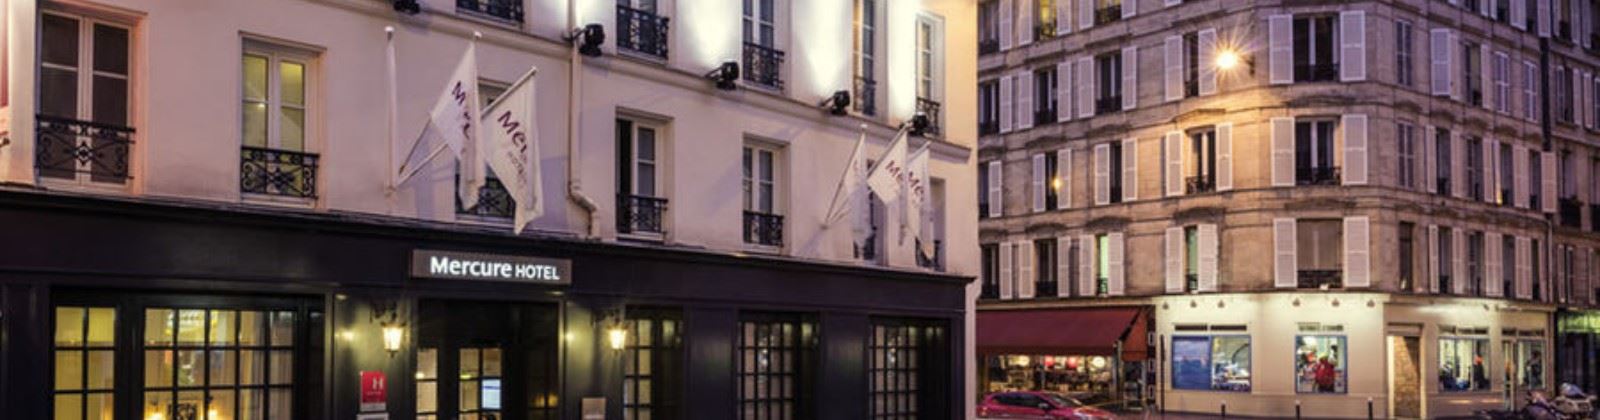 OLEVENE Image - mercure-paris-notre-dame-saint-germain-des-pres-olevene-hotel-seminaire-evenement-